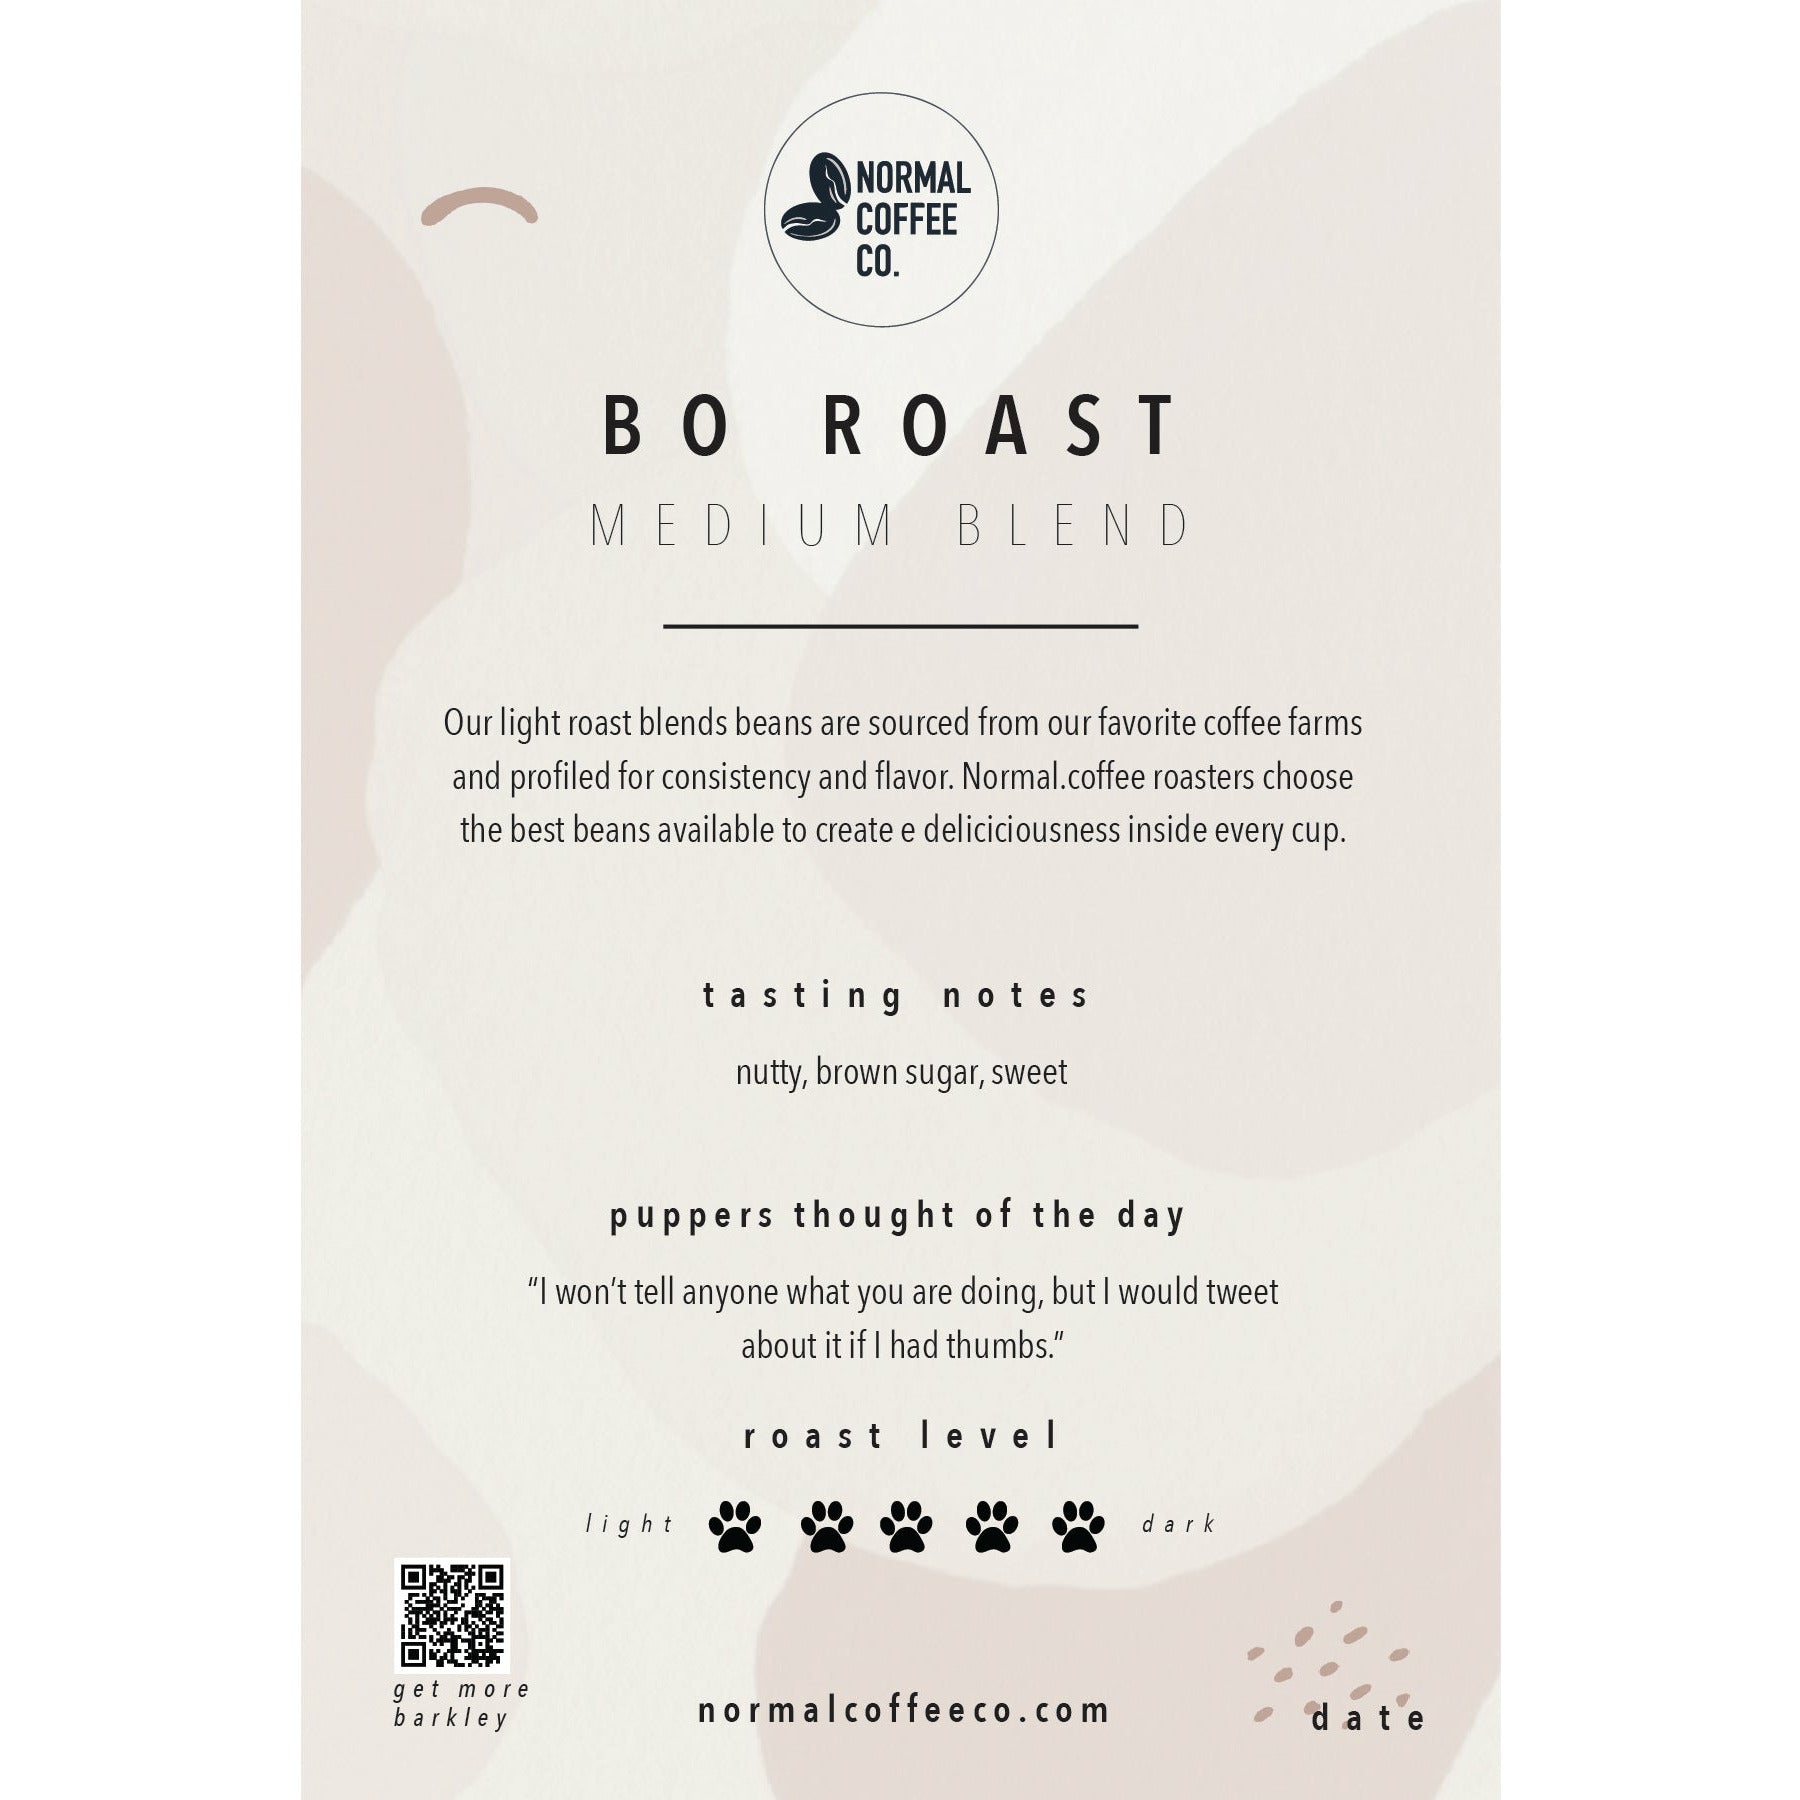 Bo Blend Medium Roast Coffee